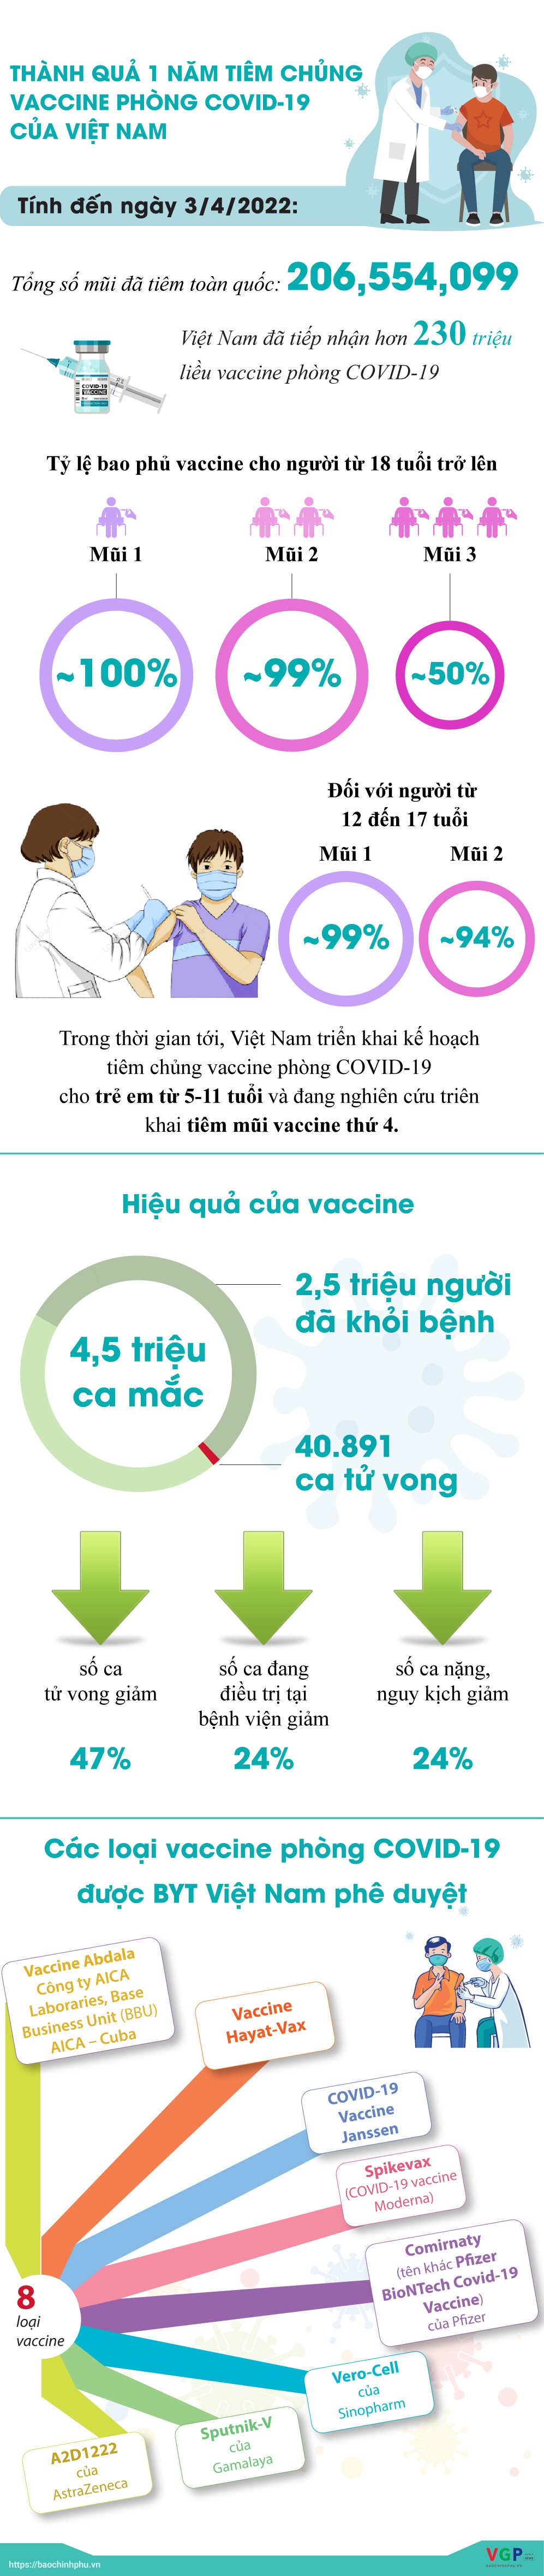 chien-dich-tiem-vaccine-than-toc-ket-qua-sau-1-nam-1649213797.jpg